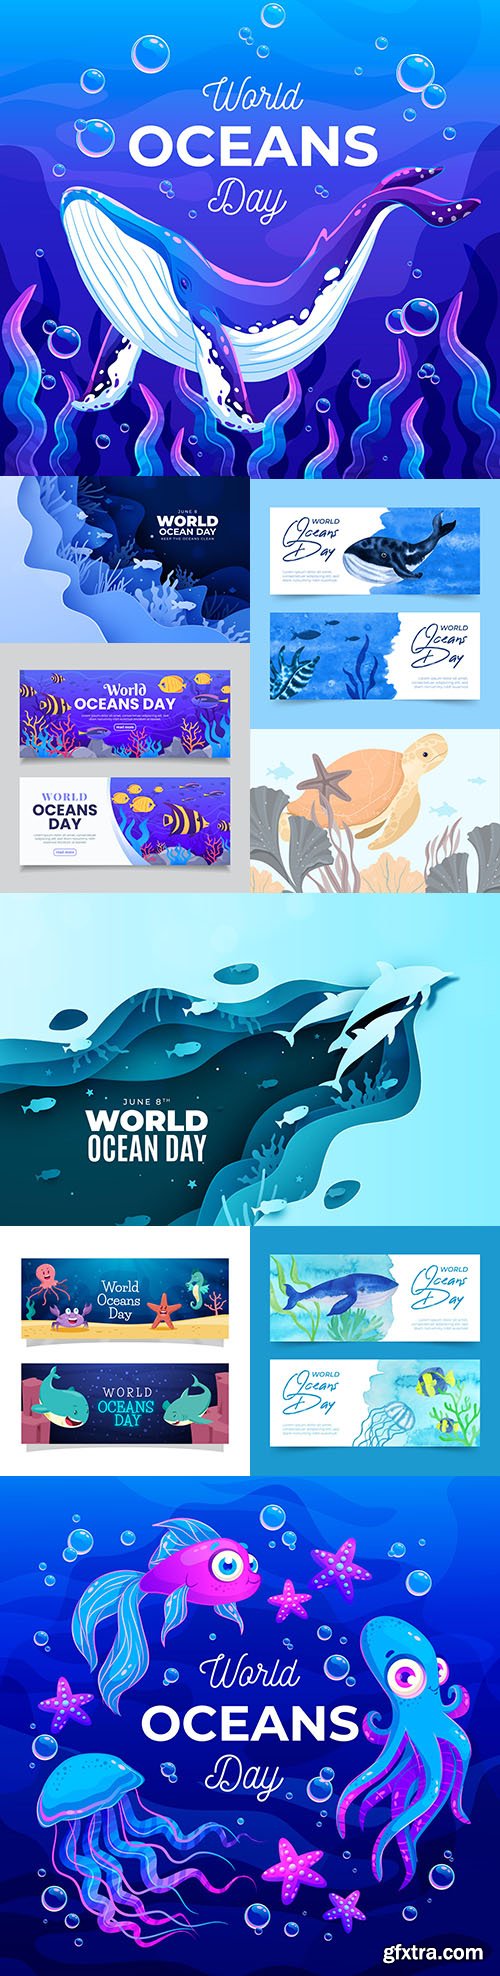 World ocean day with marine dwellers cartoon illustrations